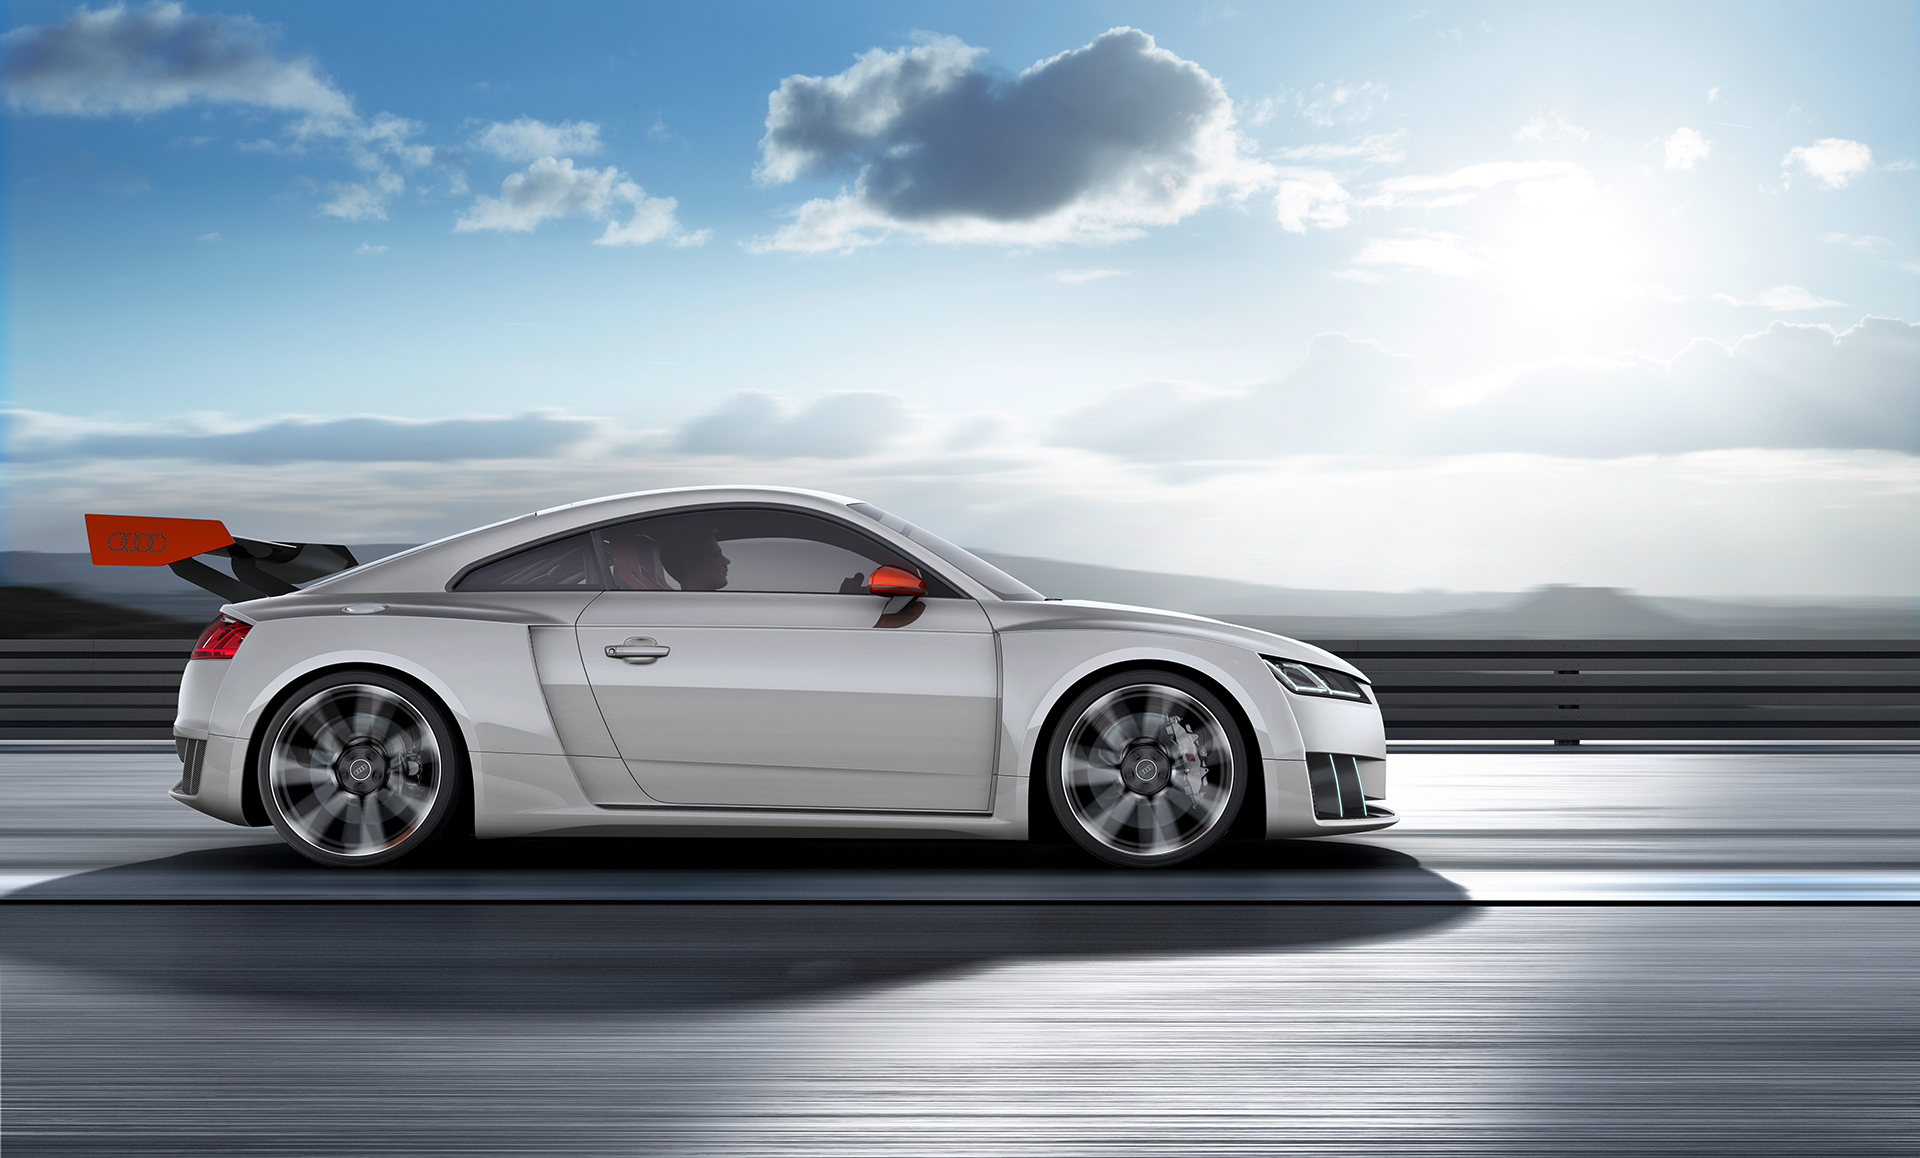 Audi TT clubsport turbo concept - side face / profil